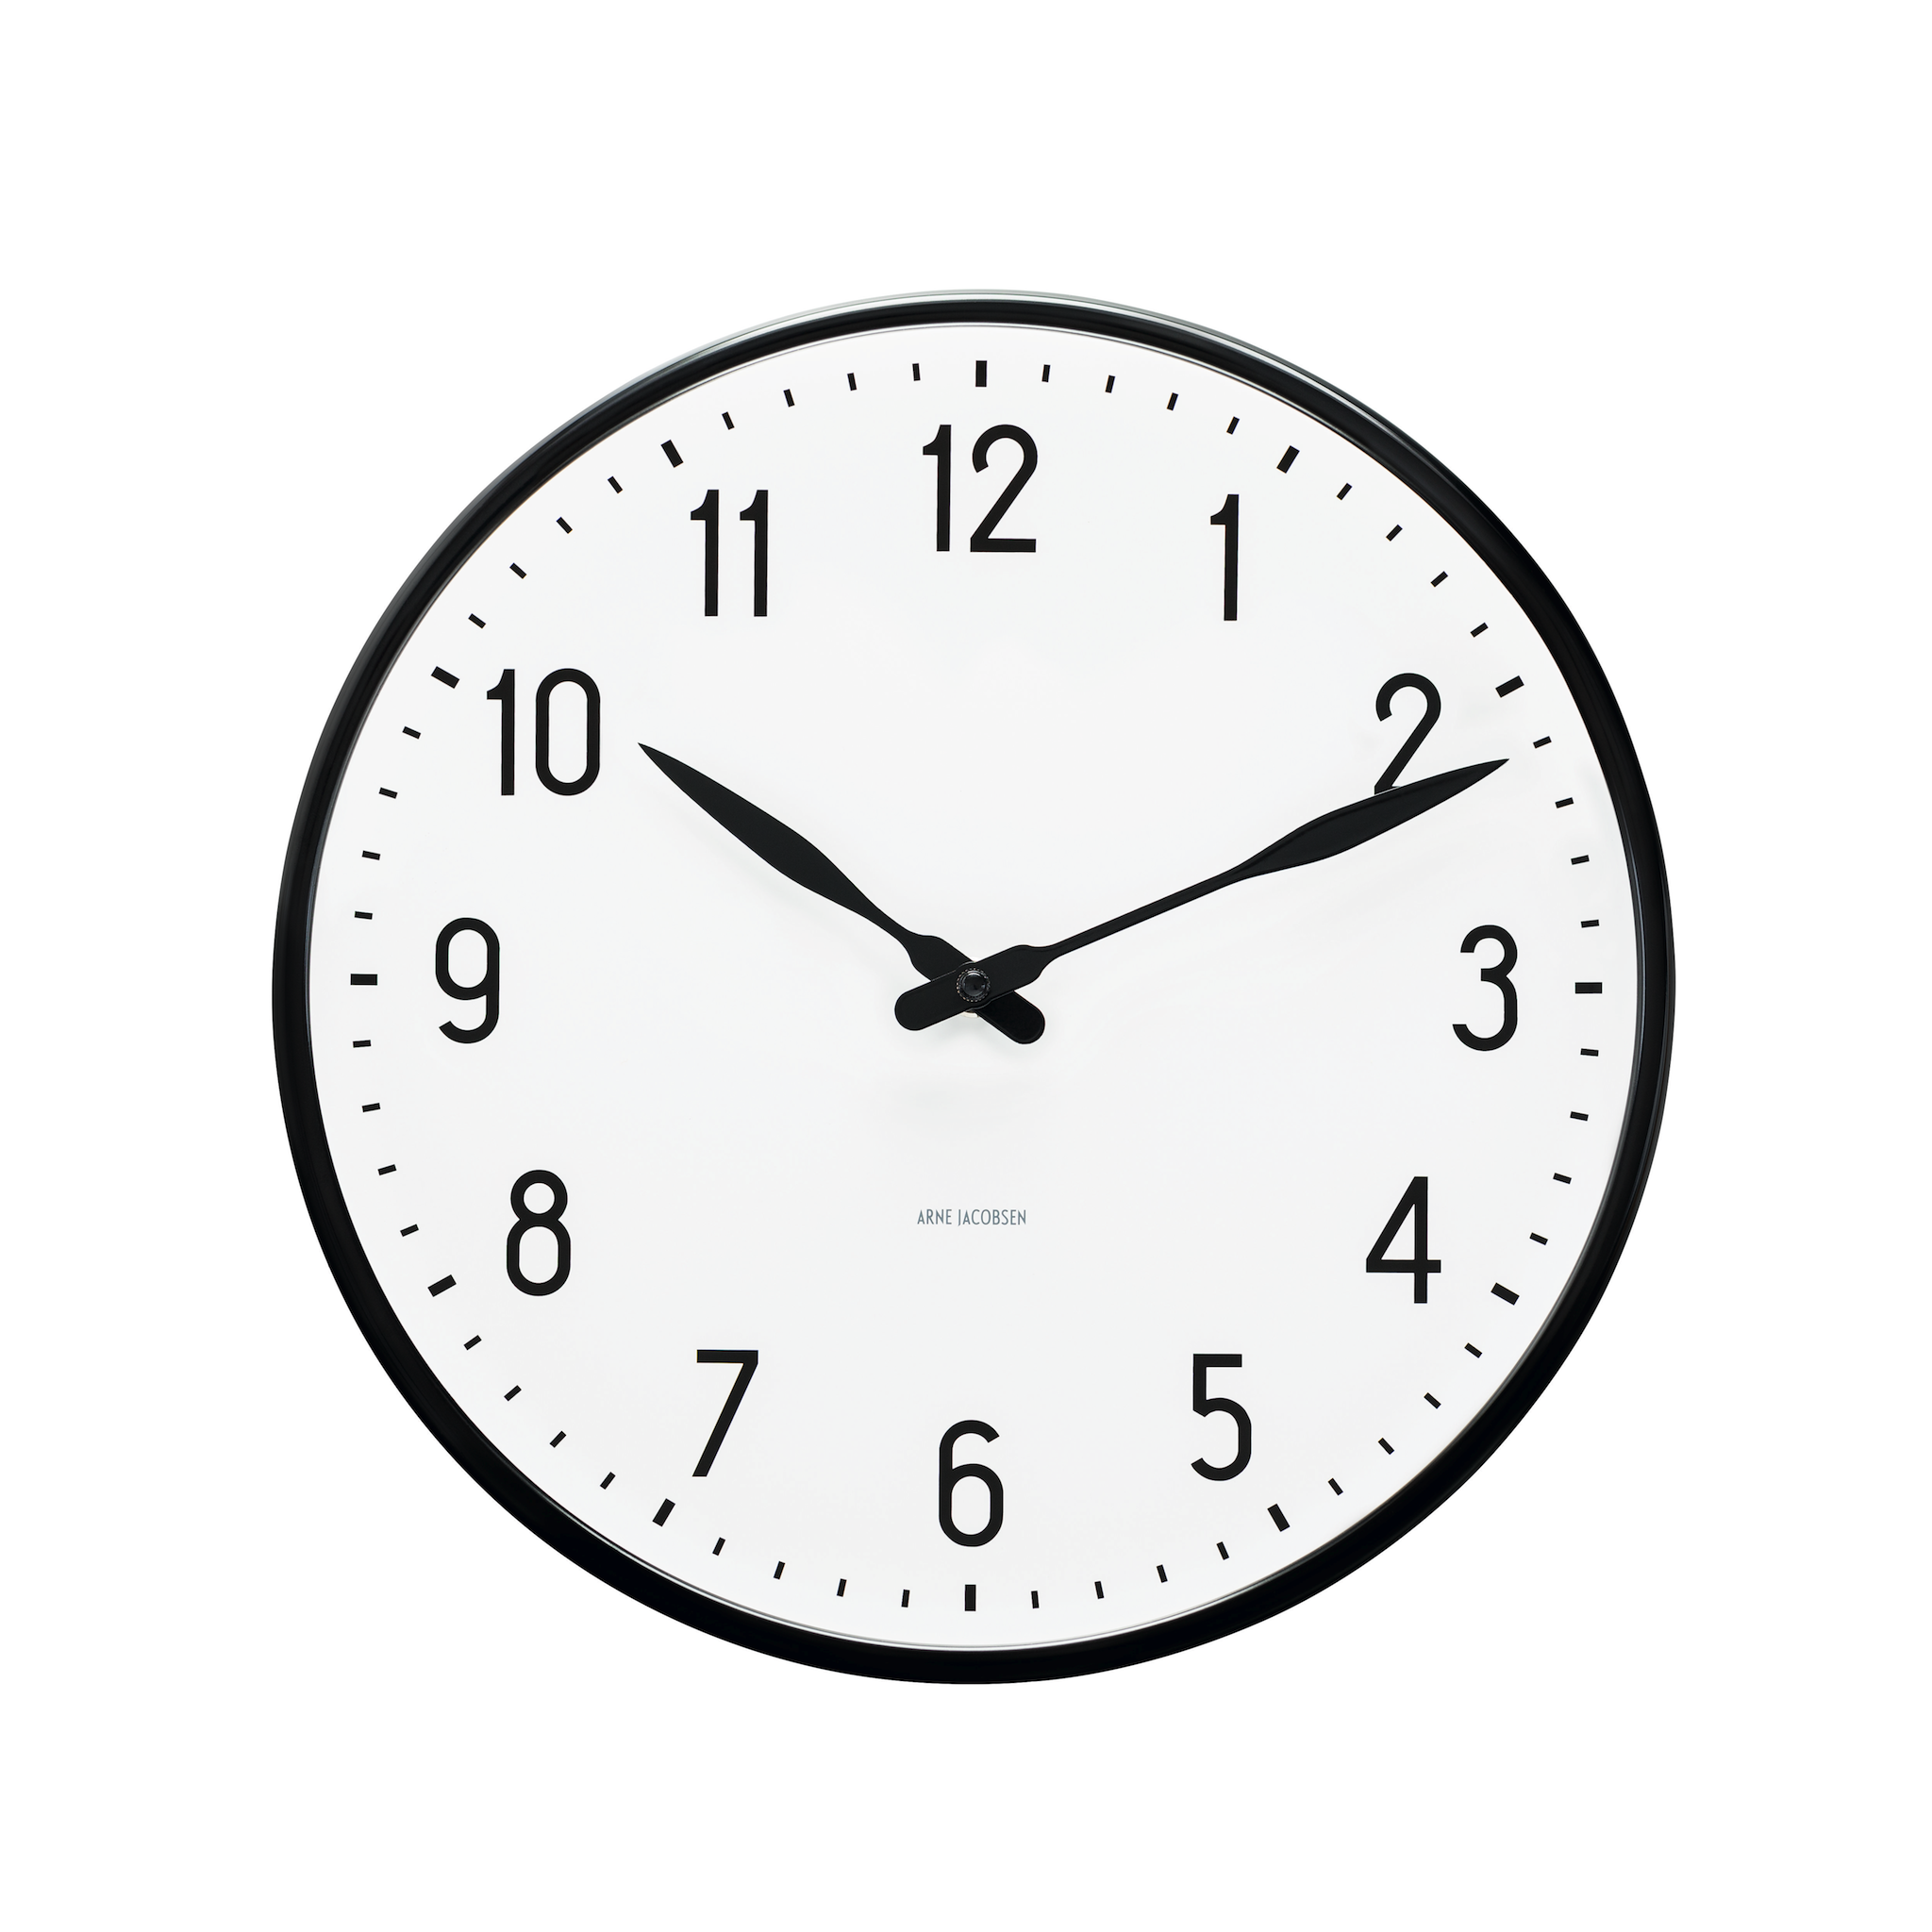 Arne Jacobsen Station Wall Clock, 8.3" / 21 cm